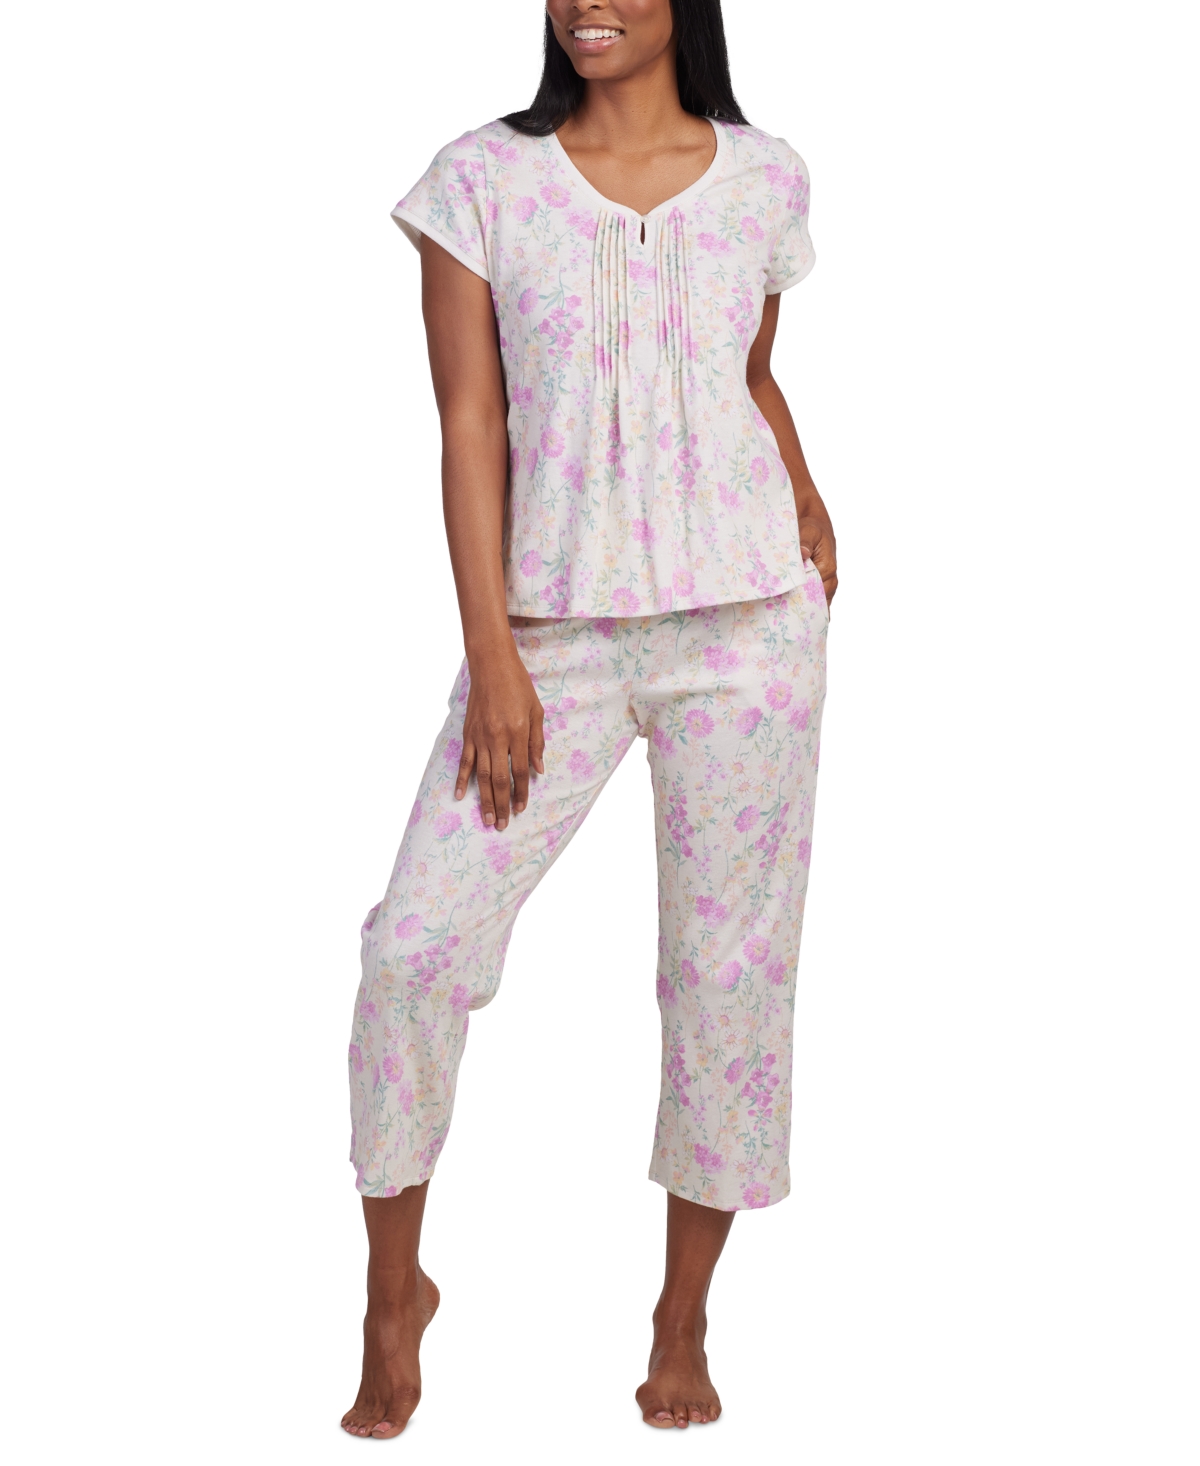 Women's 2-Pc. Cropped Floral Pajamas Set - Pink Floral